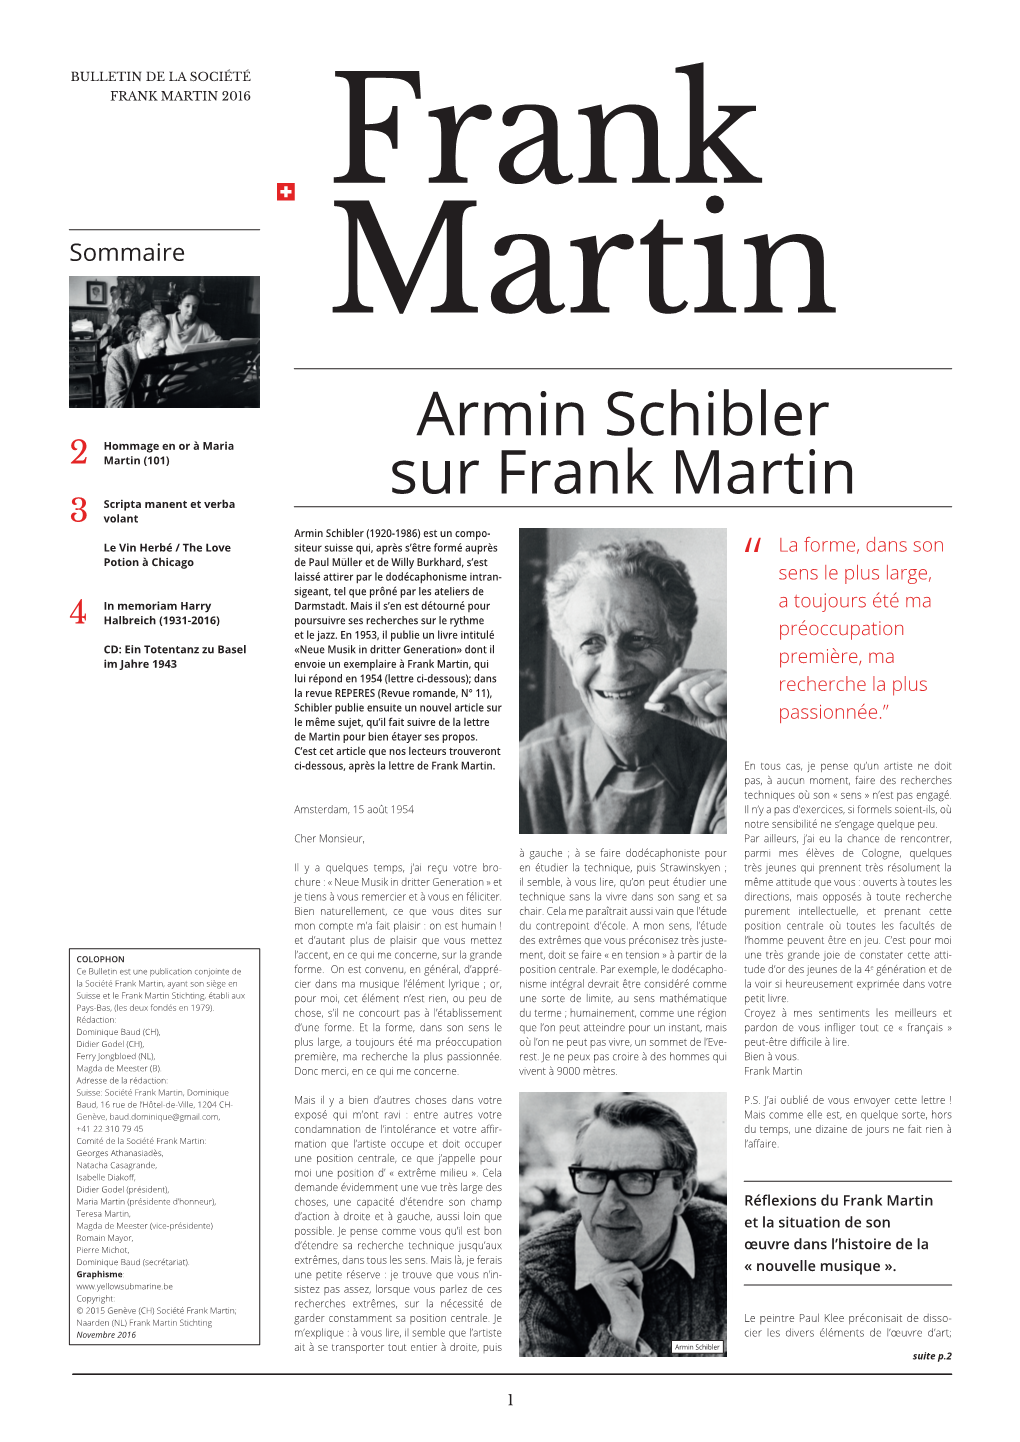 Armin Schibler Sur Frank Martin